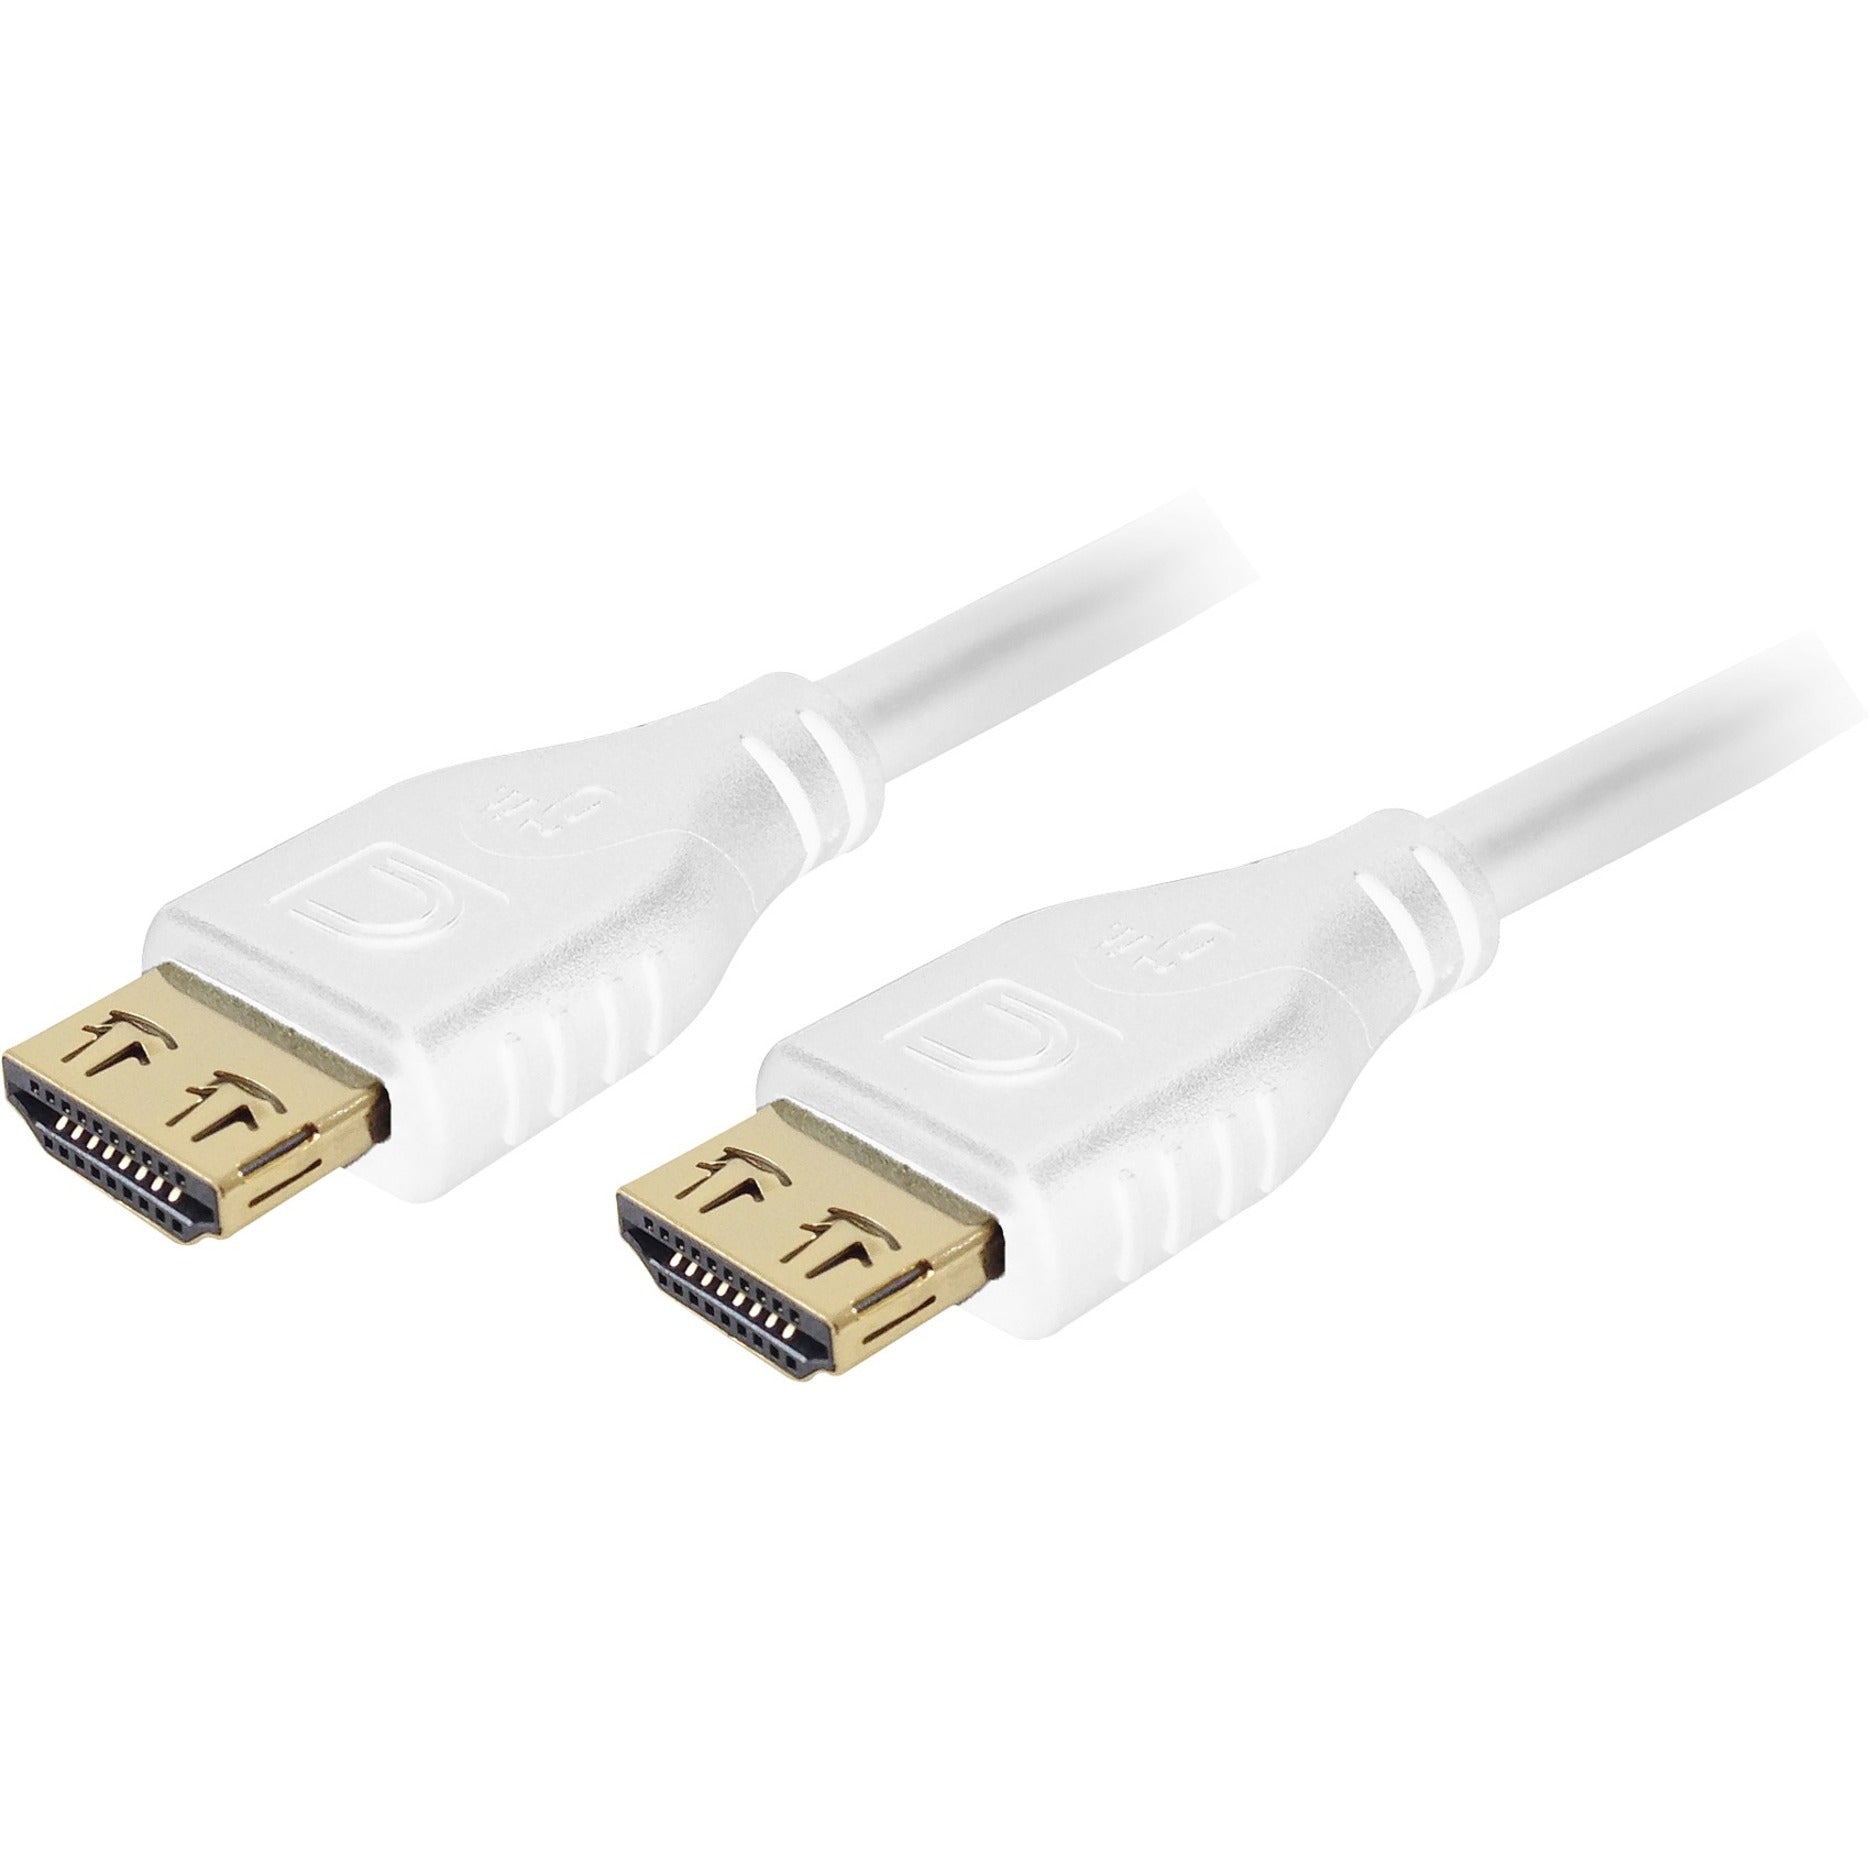 Comprehensive MHD-MHD-6PROWHT MicroFlex HDMI M/M Cable, 6FT White, Pro AV/IT Series, Lifetime Warranty